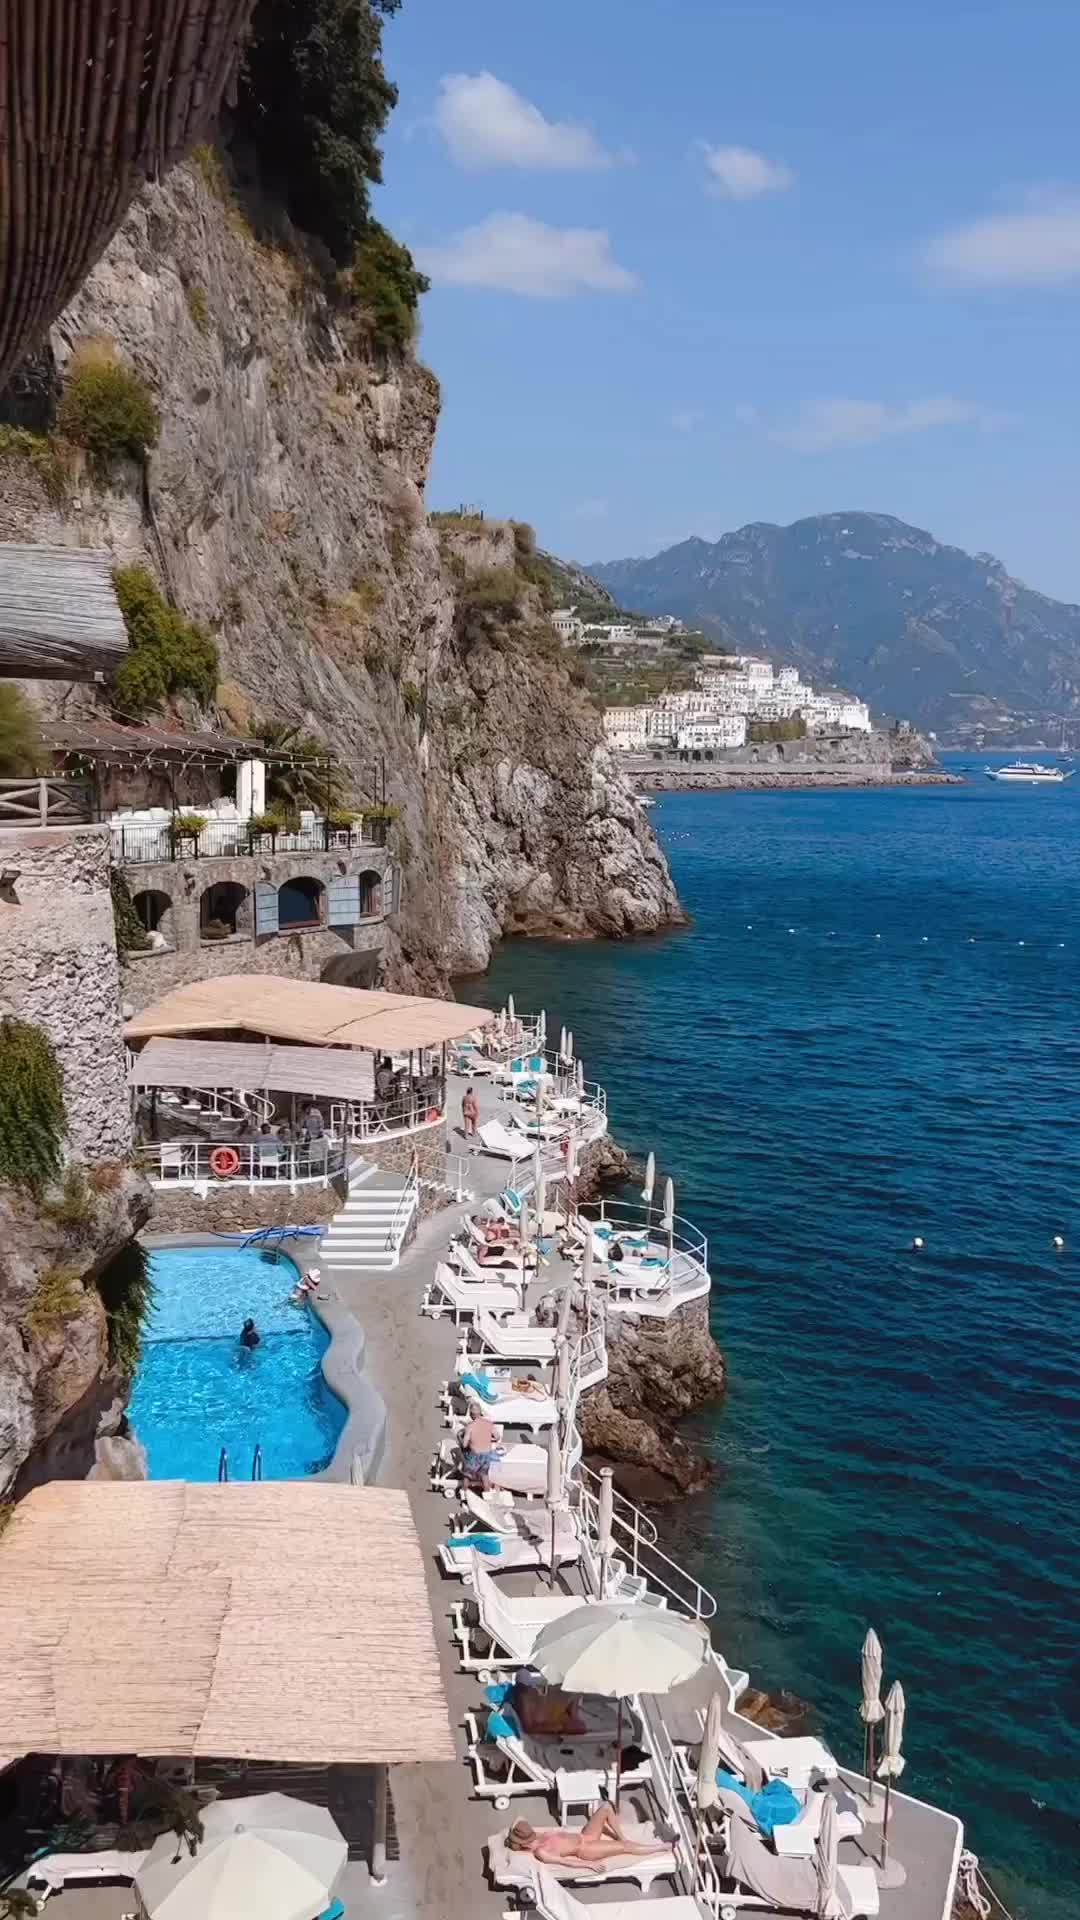 Luxurious Stay at Hotel Santa Caterina, Amalfi Coast